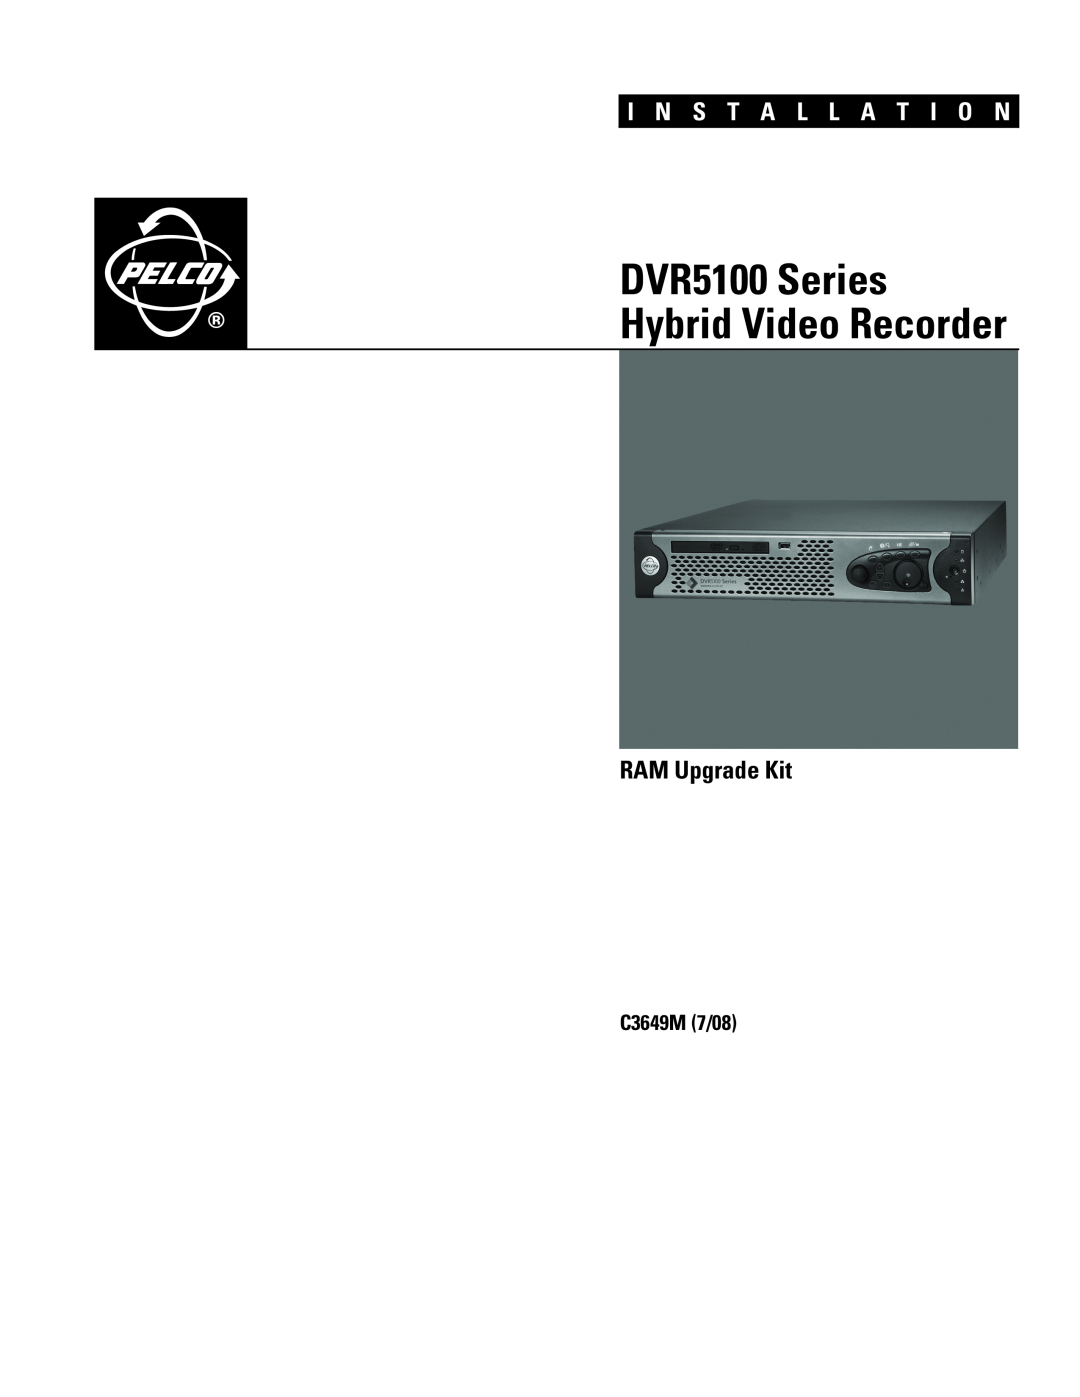 Pelco 5116DVD-1500 manual RAM Upgrade Kit, DVR5100 Series Hybrid Video Recorder, I N S T A L L A T I O N, C3649M 7/08 